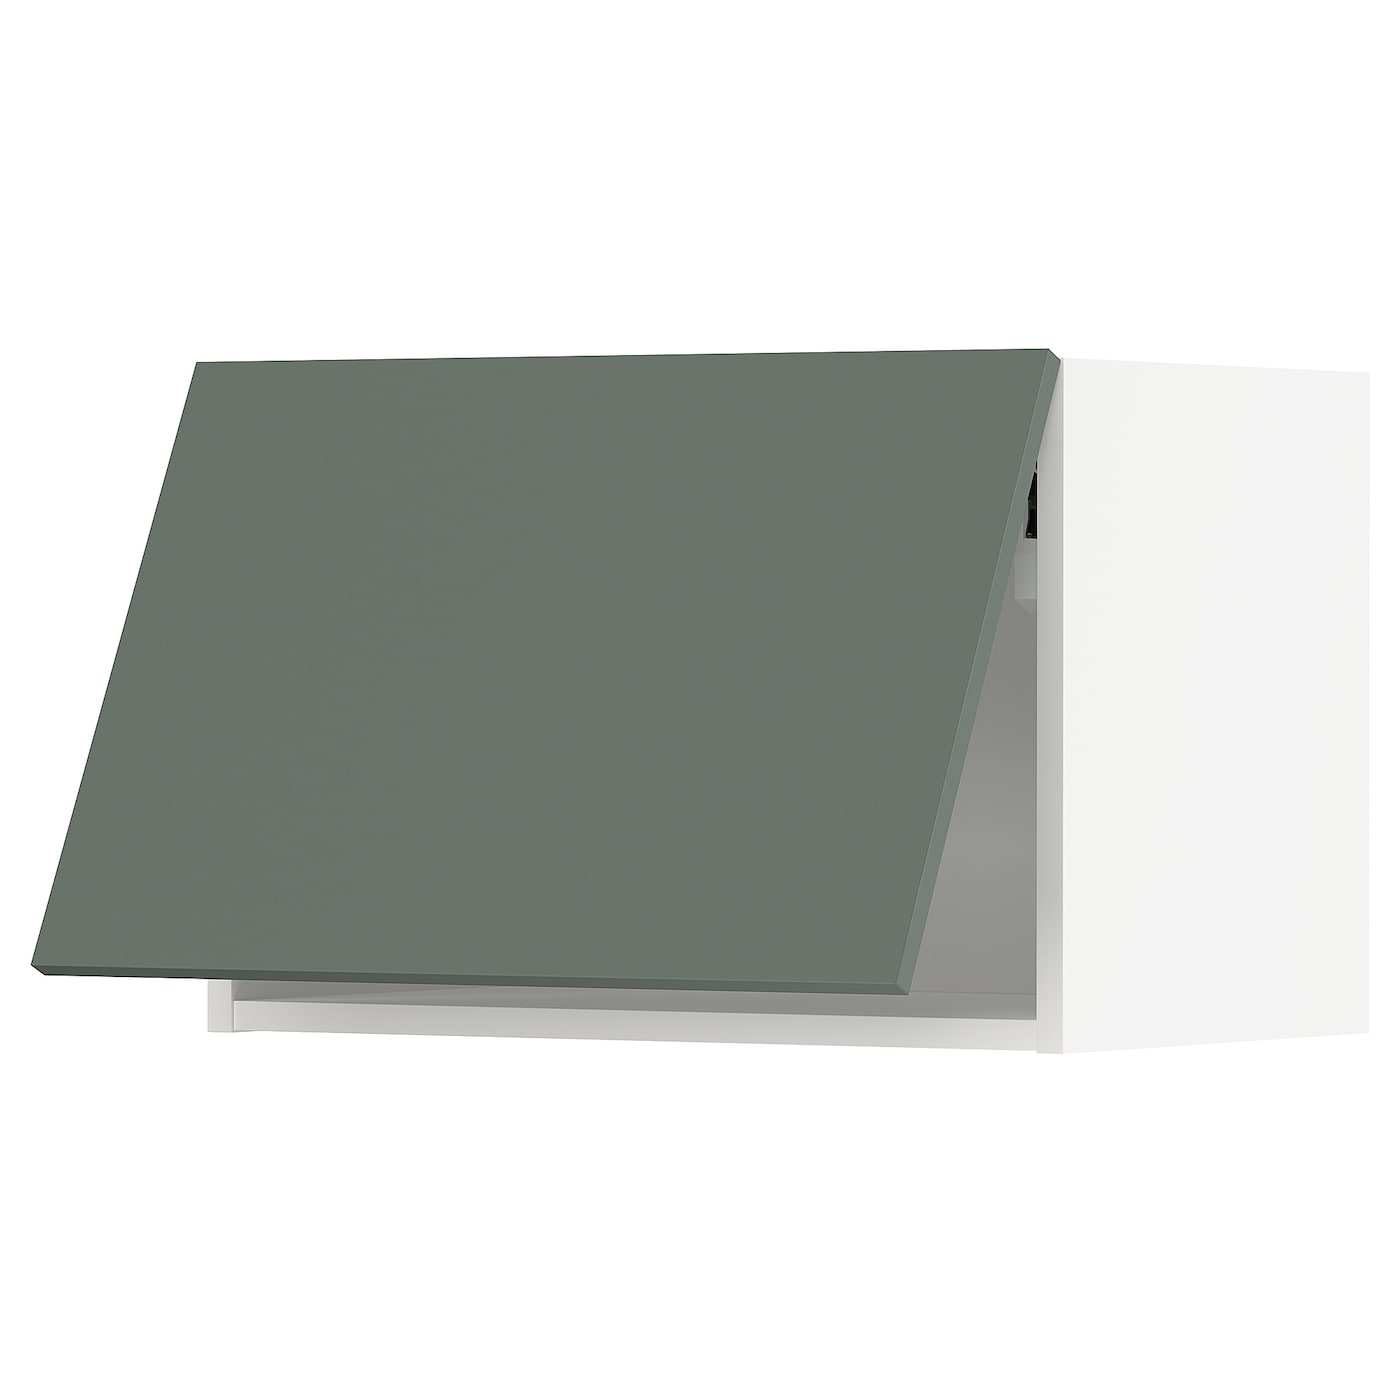 Навесной шкаф - METOD IKEA/ МЕТОД ИКЕА, 80х60 см, белый/темно-зеленый